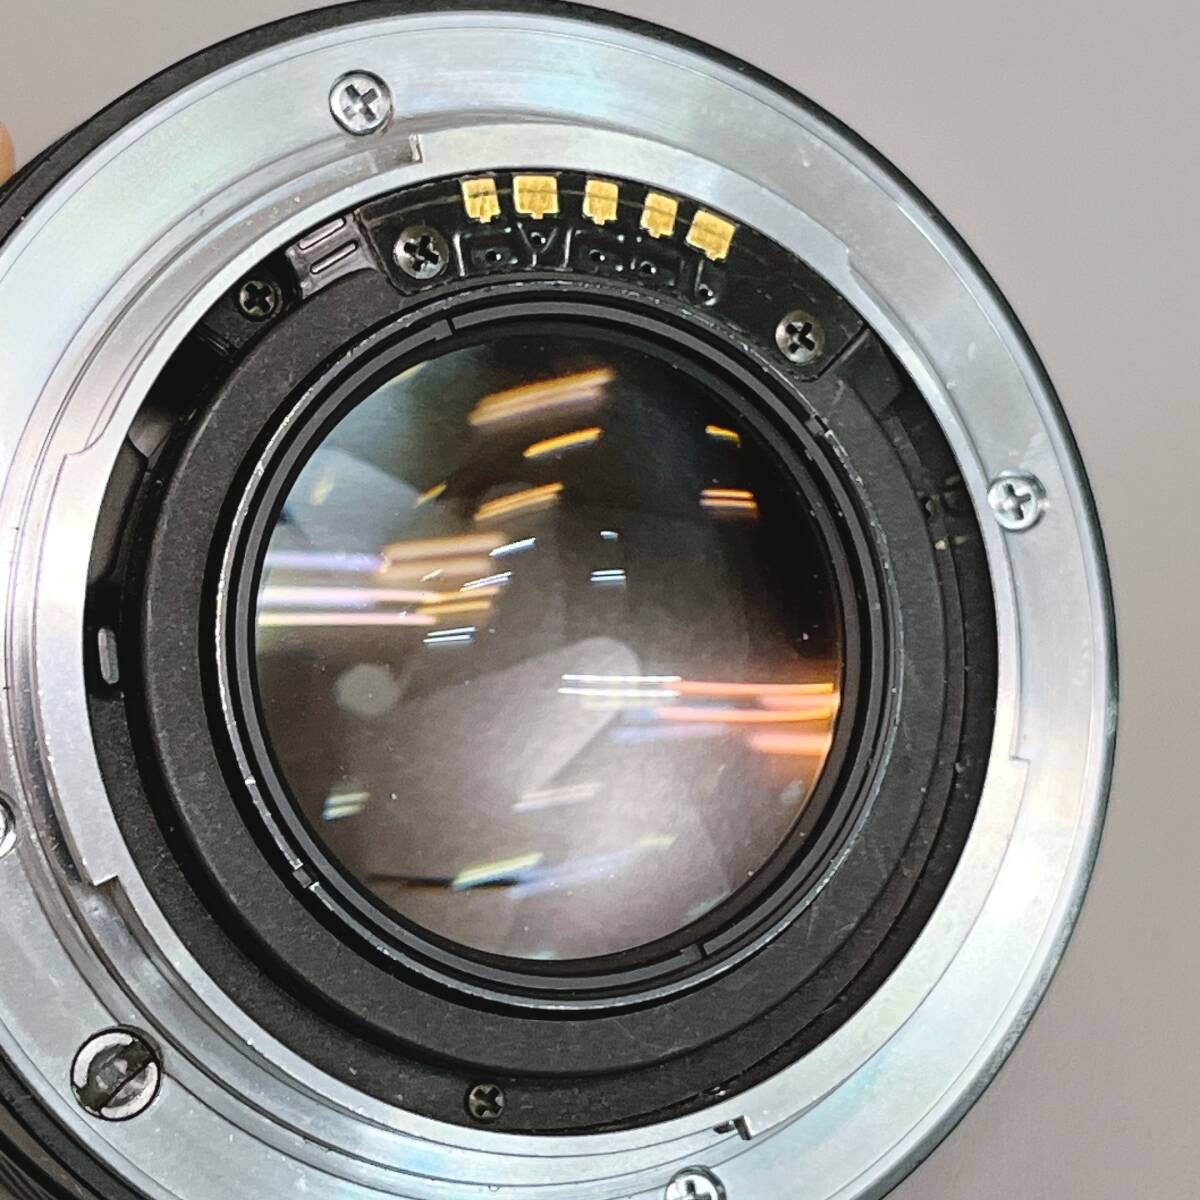 ② Minolta camera lens filter attaching (MINOLTA AF 50.1:1.4(22))